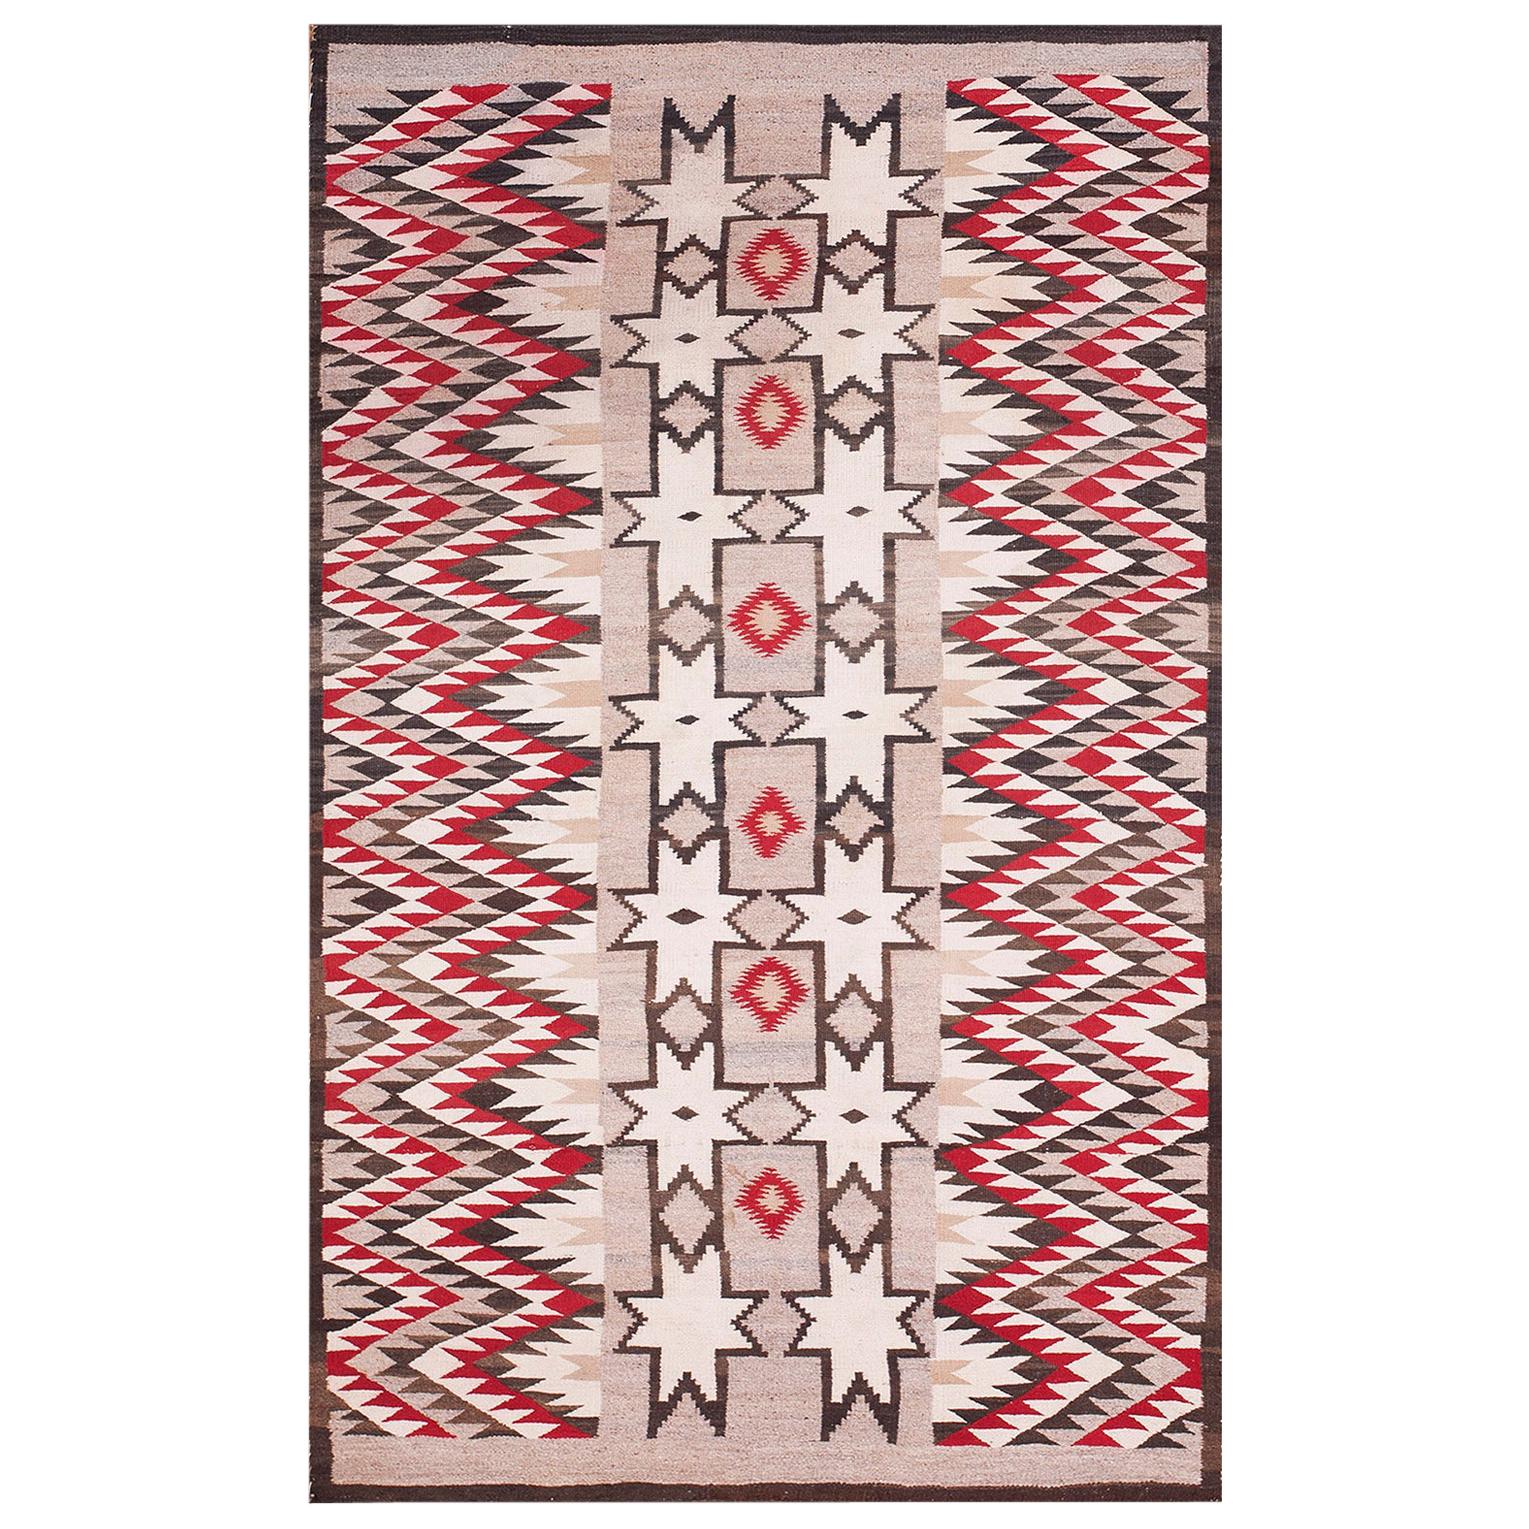 Early 20th Century American Navajo Carpet ( 3'8" x 5'10" - 112 x 178 )